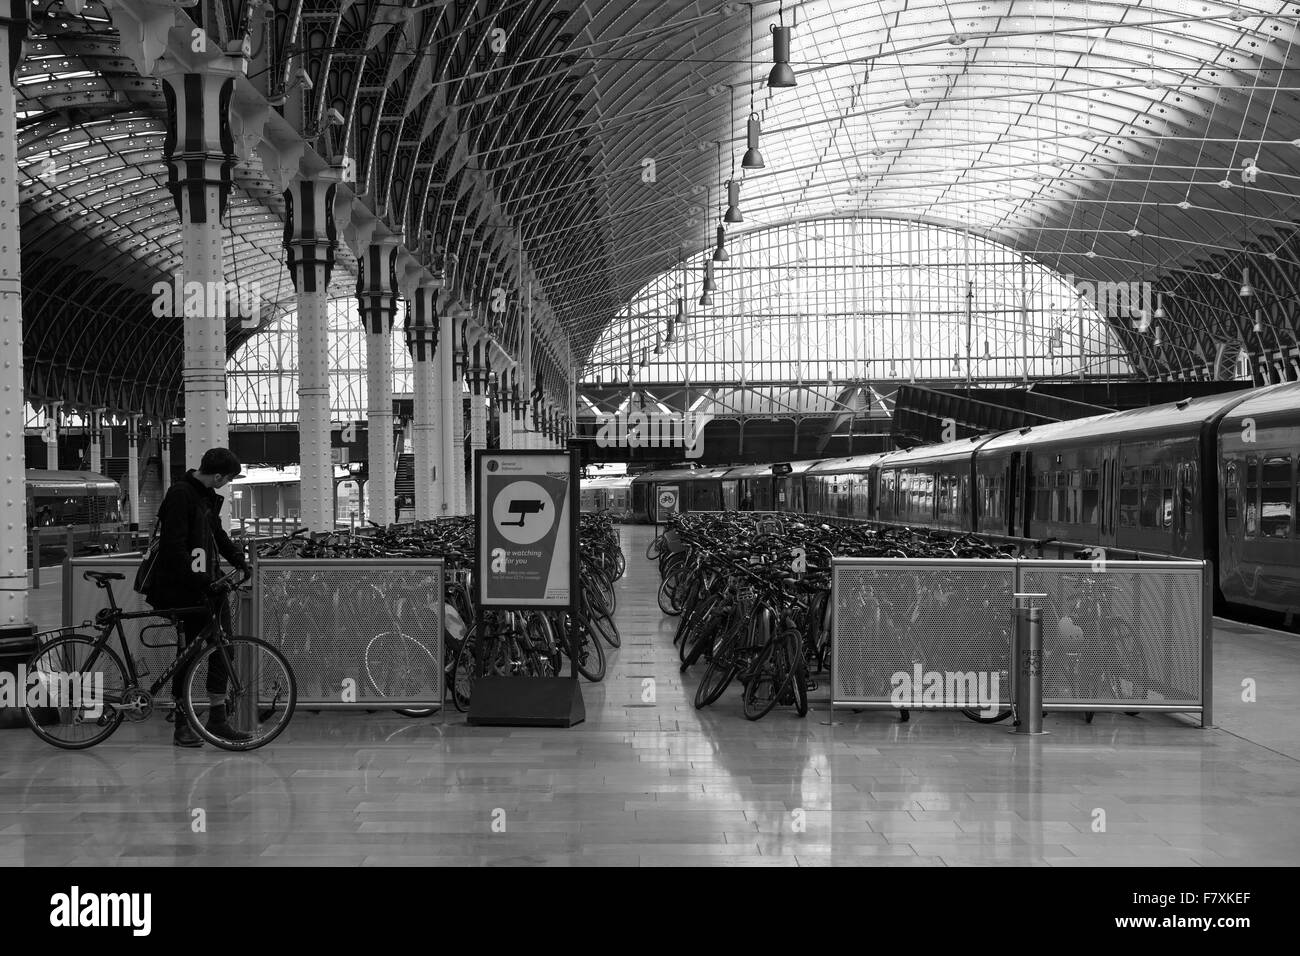 Fahrradladen am Bahnhof London Paddington Stockfoto